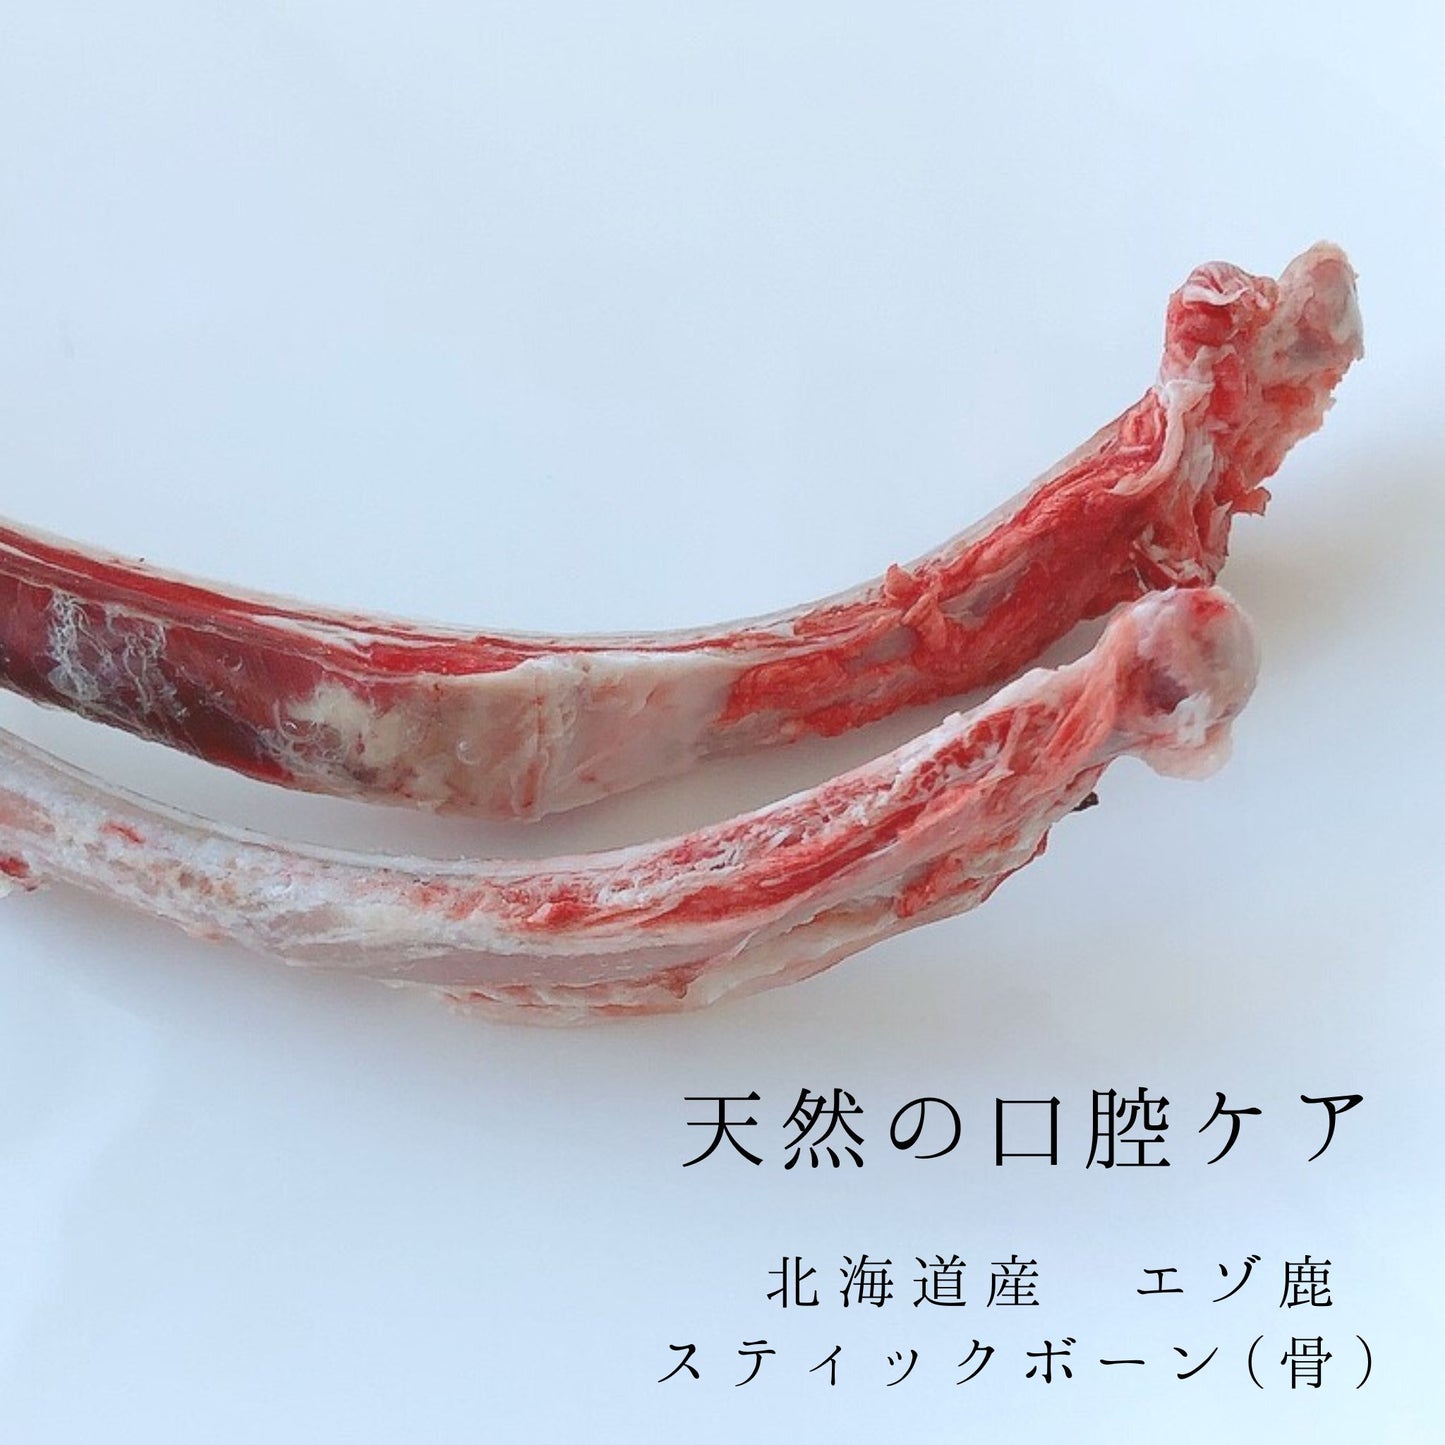 Hokkaido deer bone Ezo deer dog cat additive-free domestic stick bone soup oral care toothpaste venison 